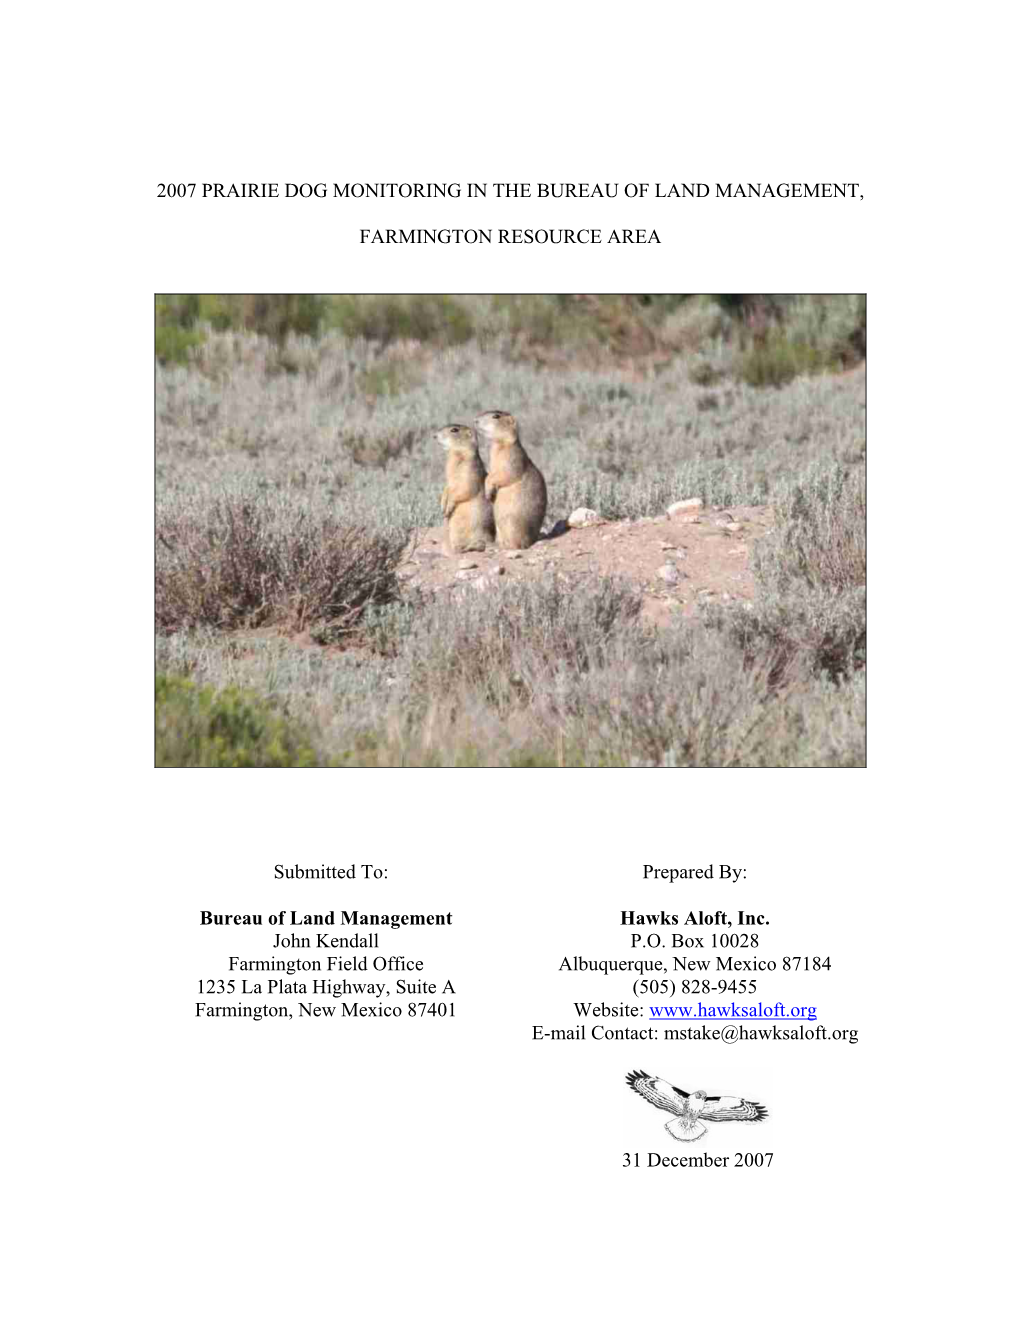 2007 Prairie Dog Monitoring in the Bureau of Land Management